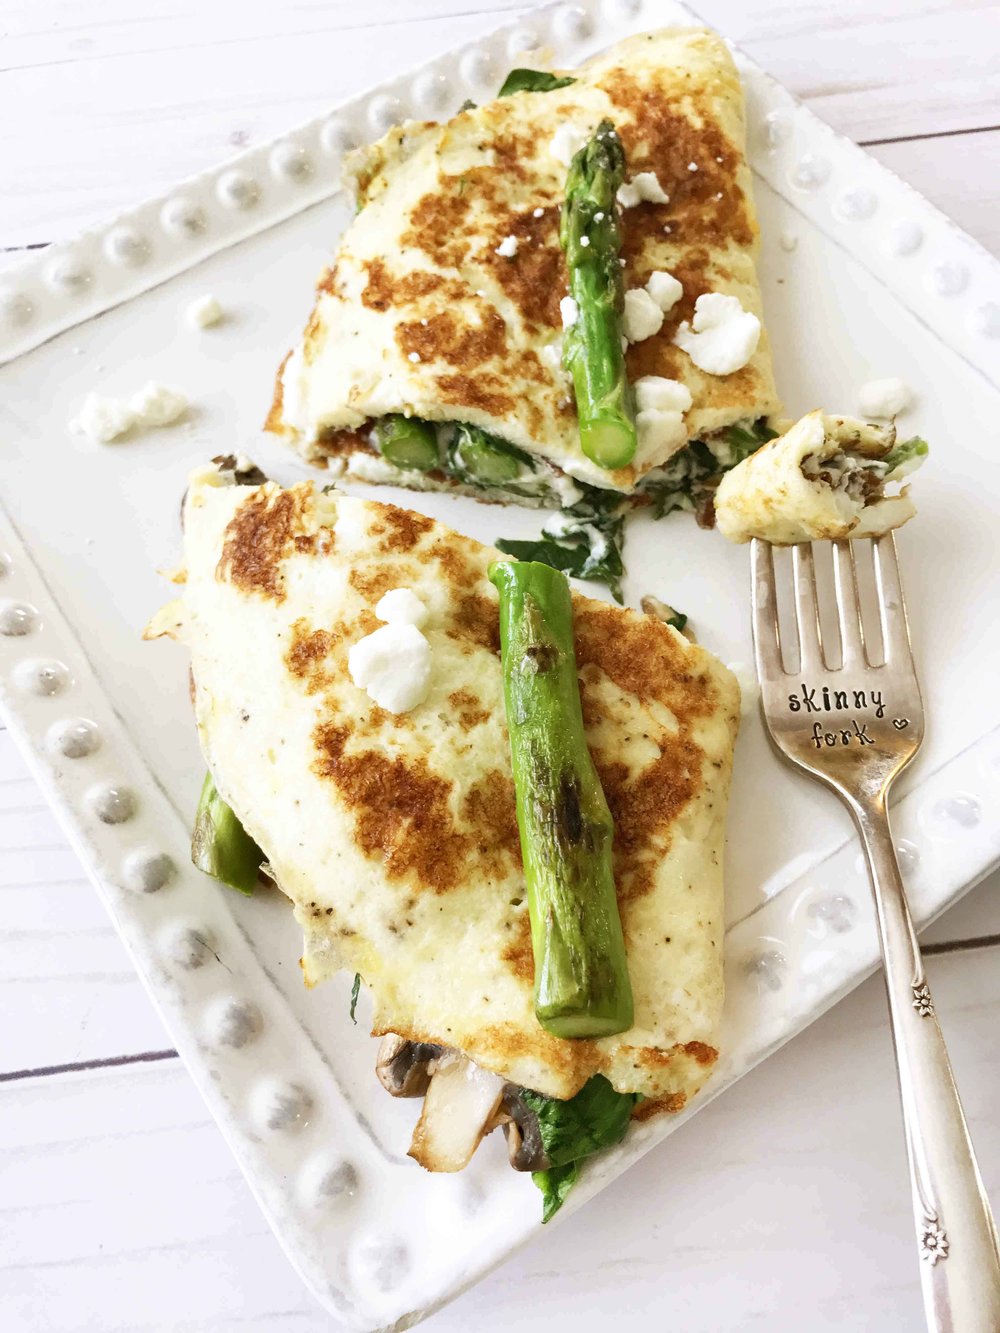 Mushroom and asparagus omelette